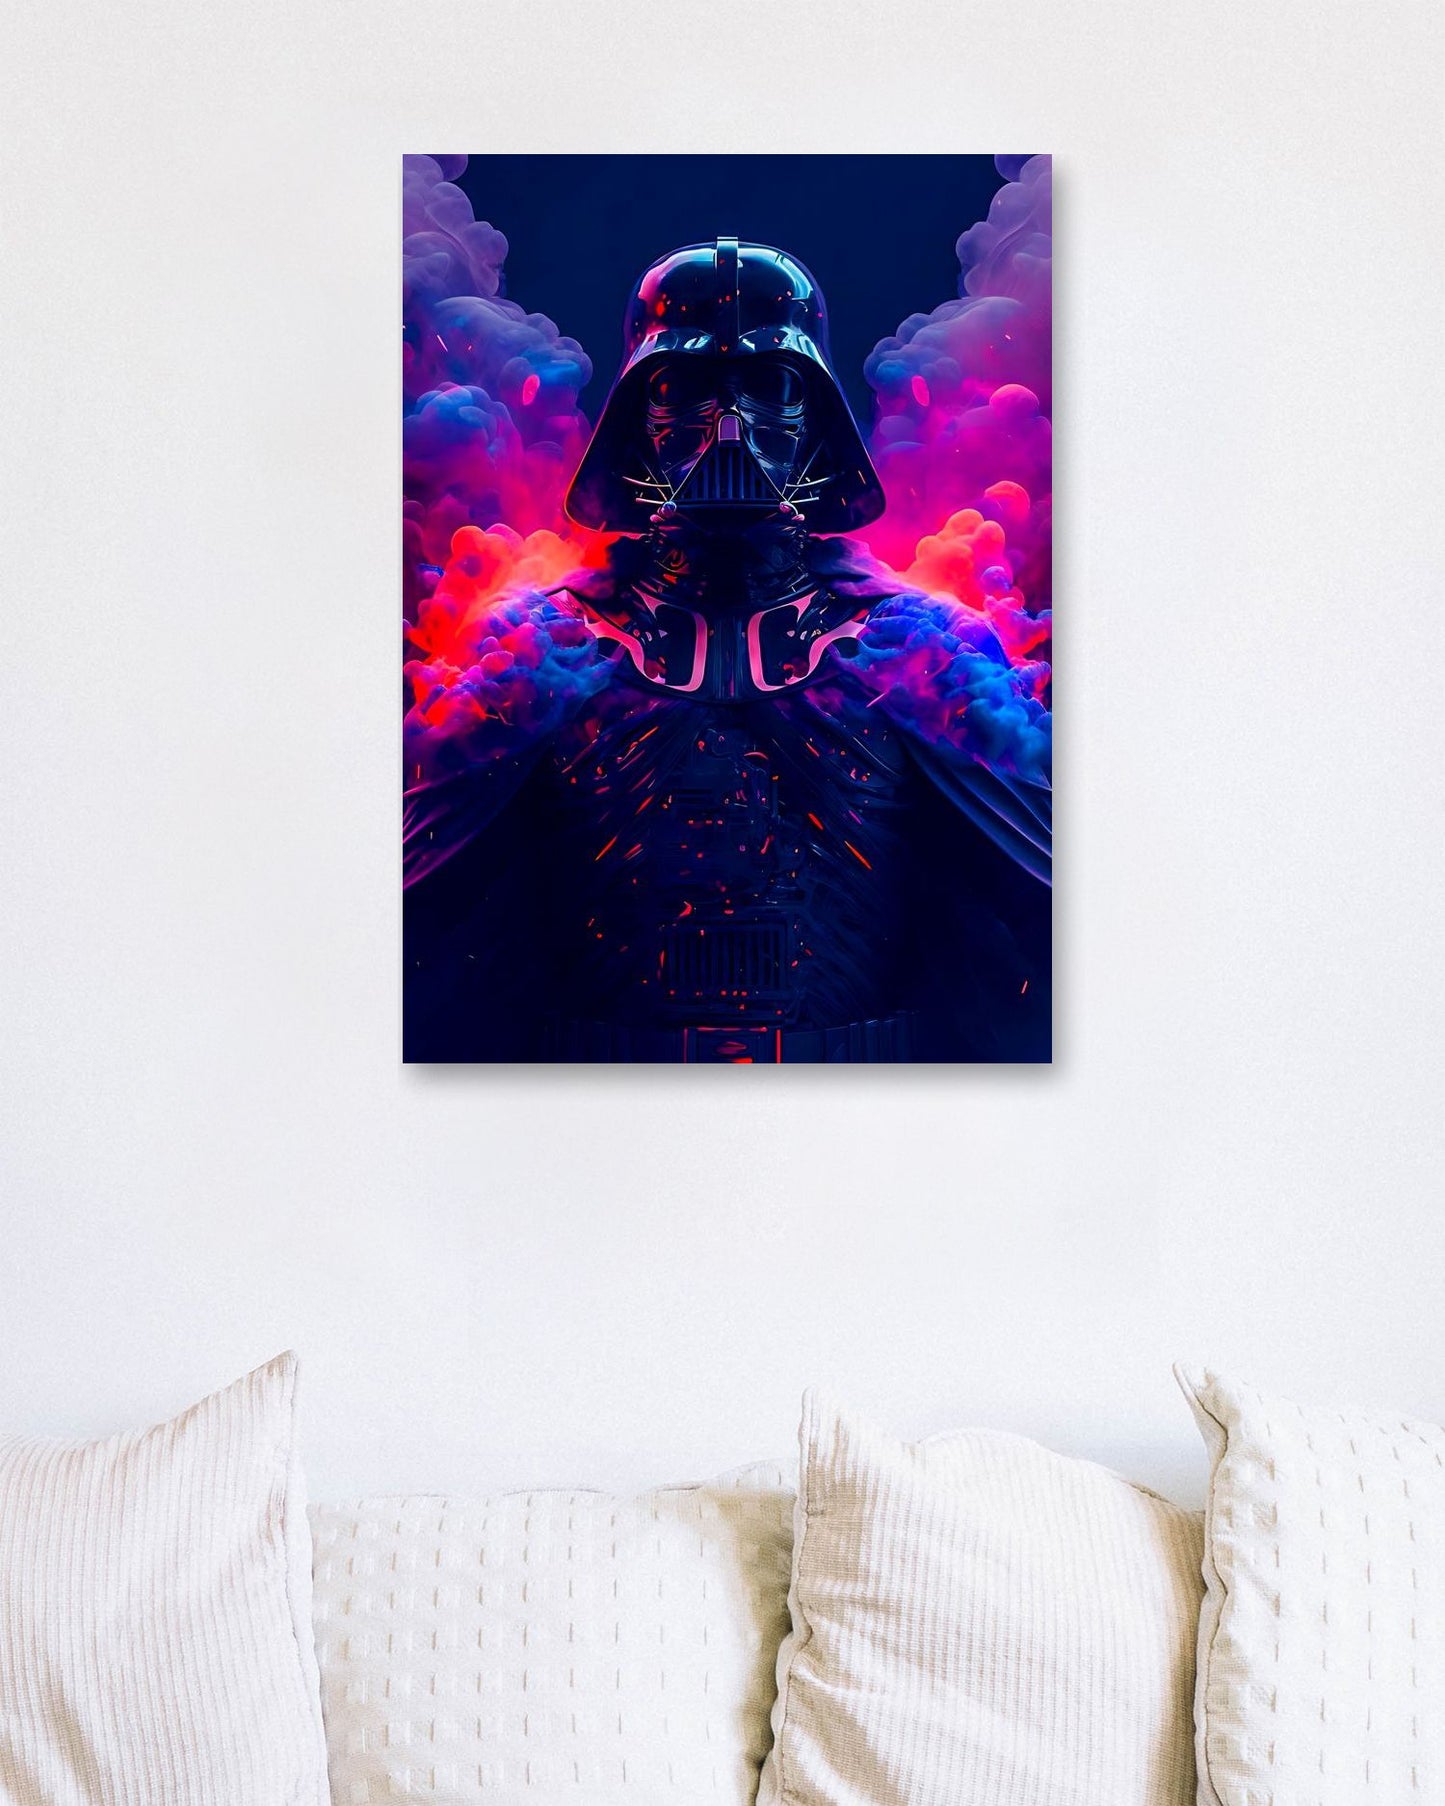 Darth Vader 1 - @LightCreative